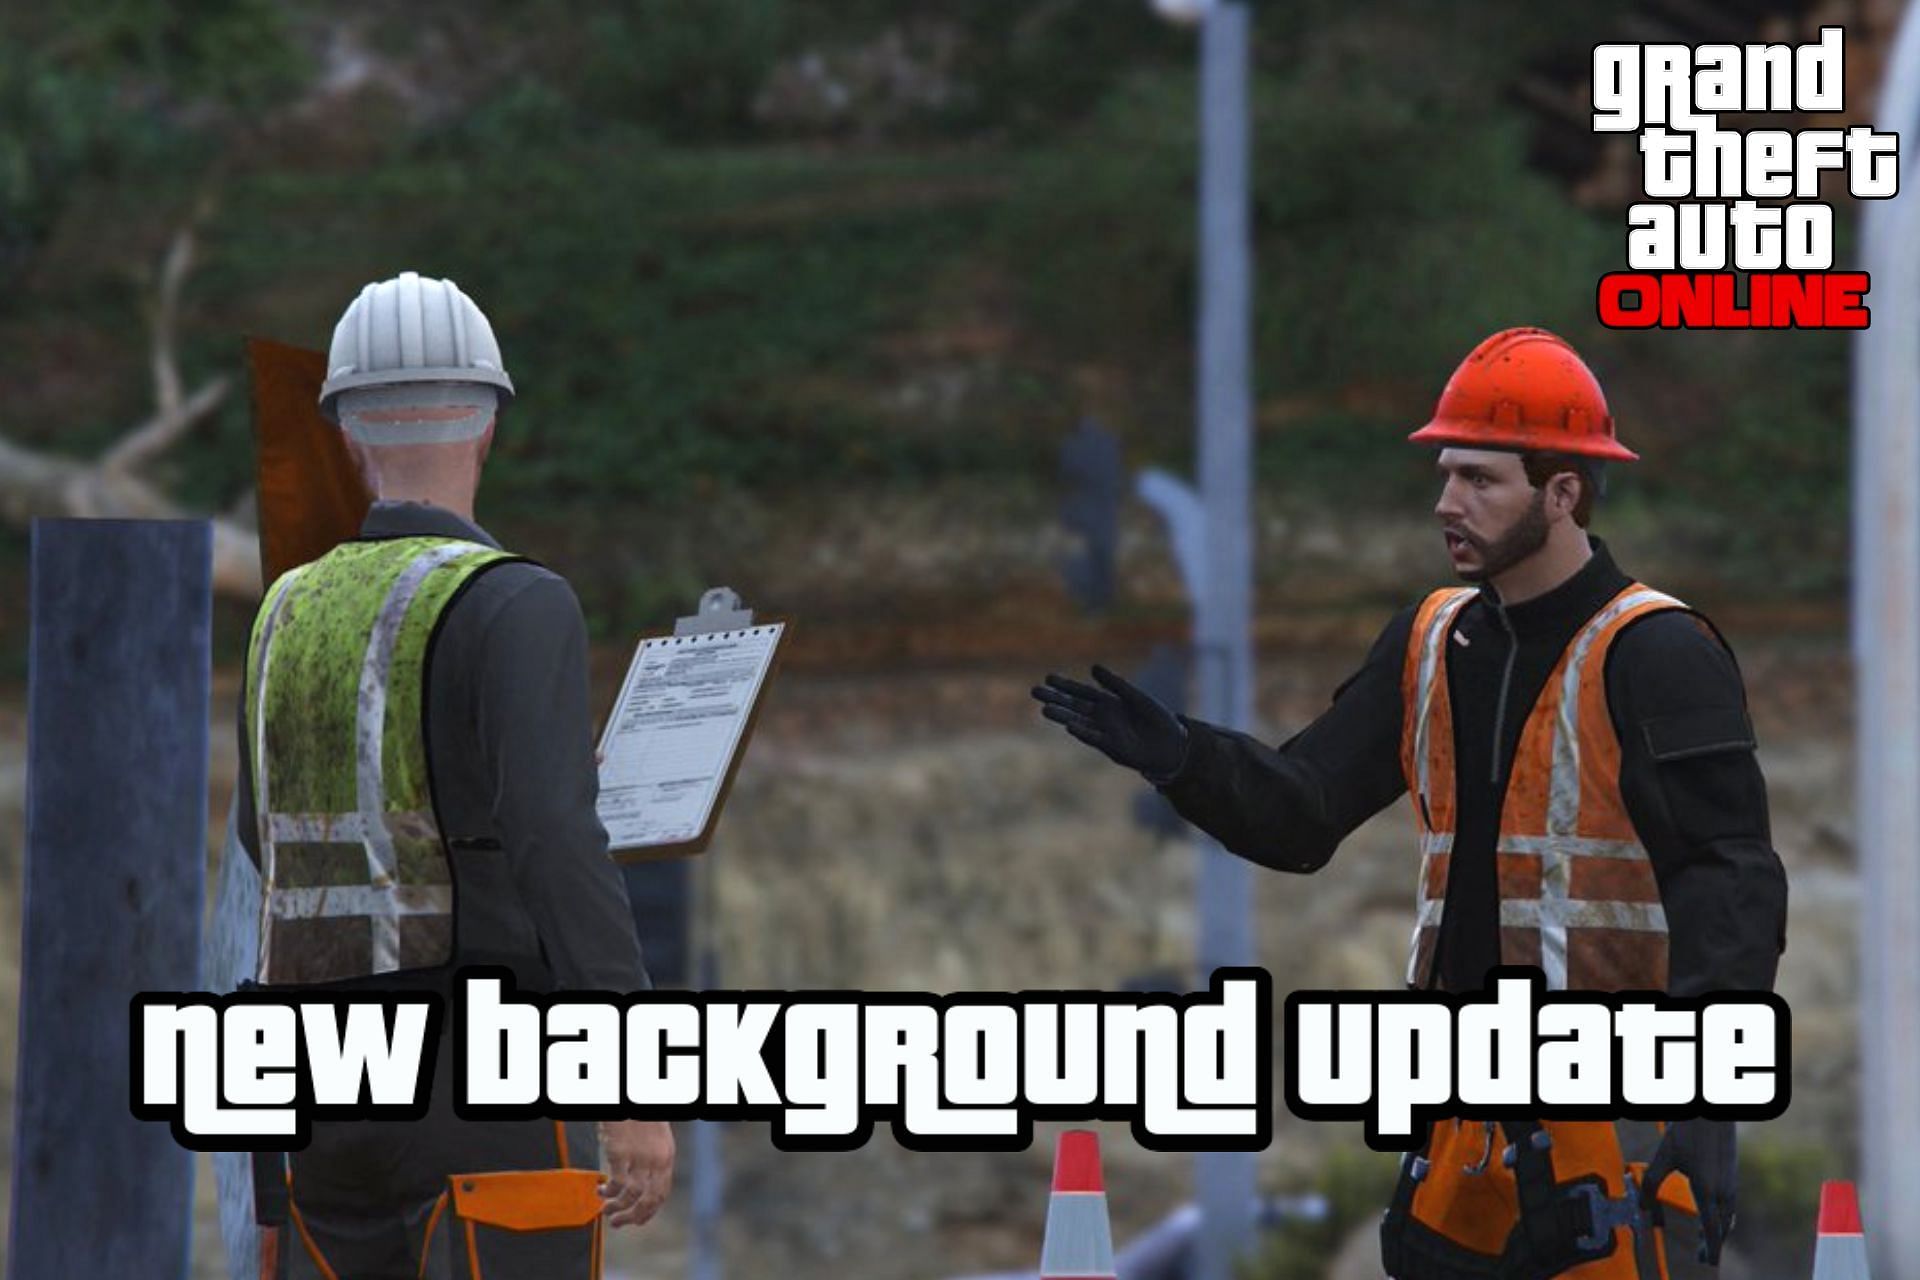 GTA Online background update fixes glitches in summer DLC